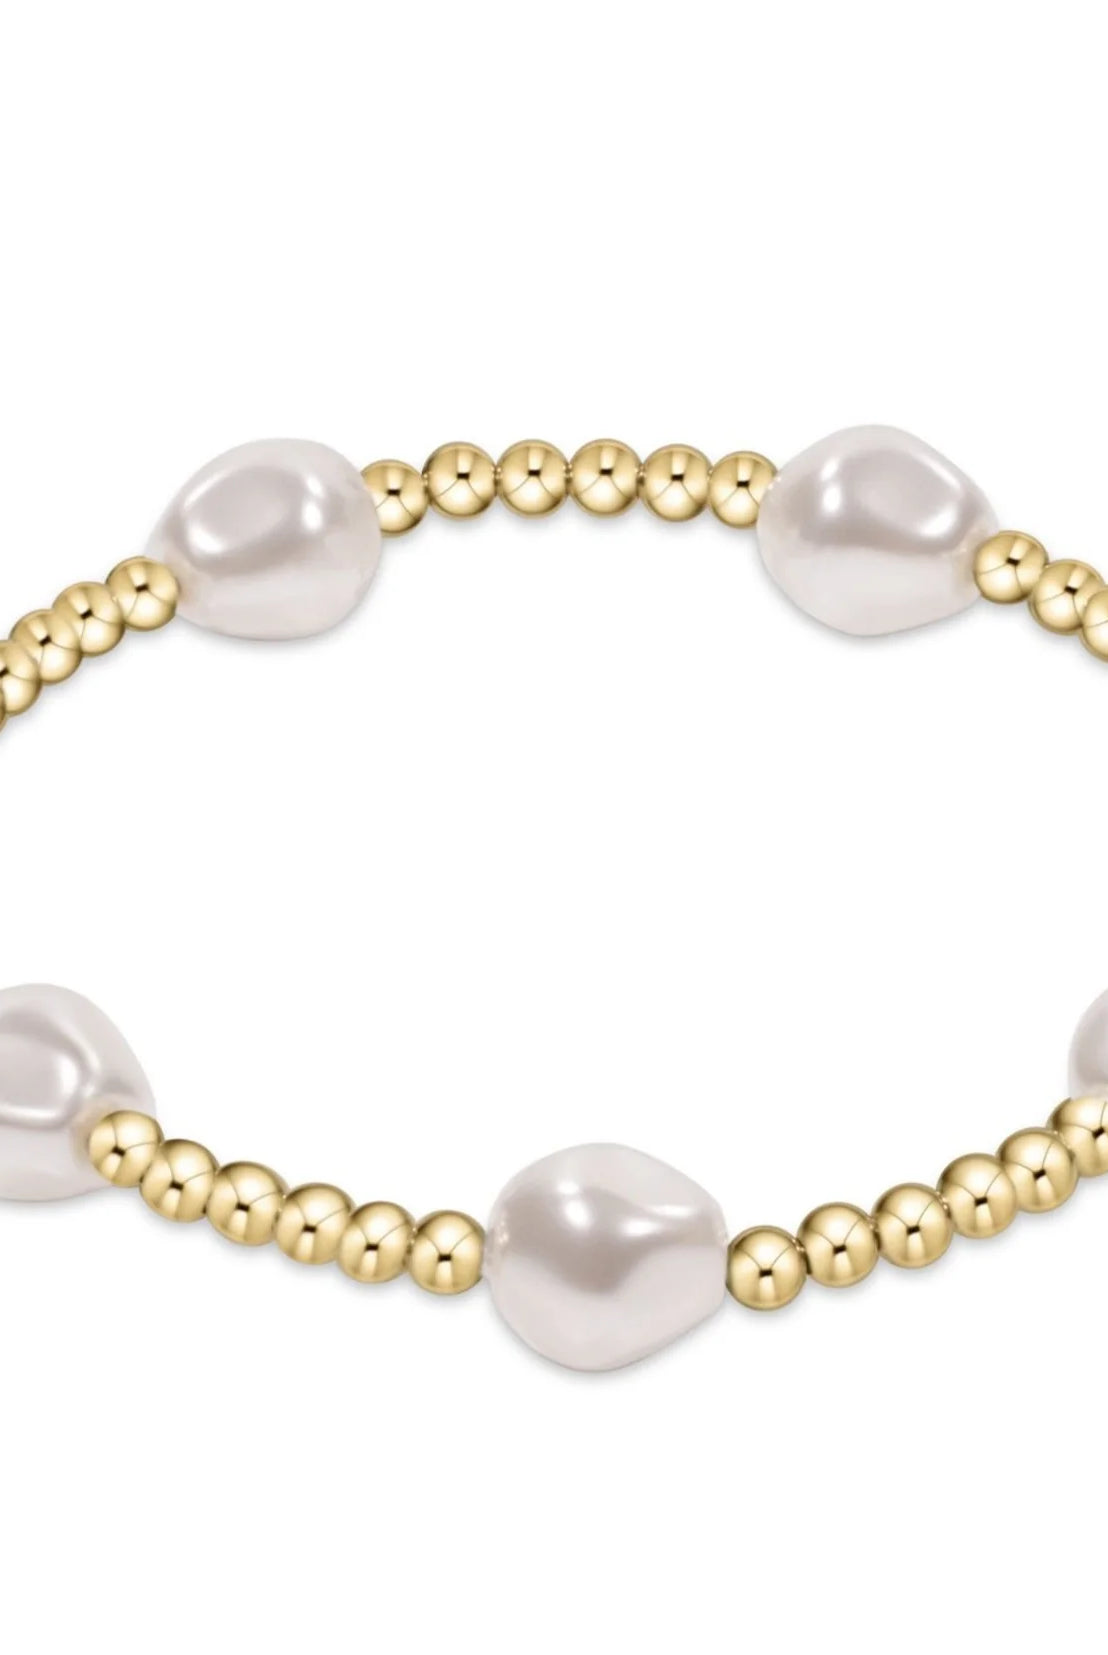 Admire Gold 3mm Pearl Bracelet-Bracelets-eNewton-The Lovely Closet, Women's Fashion Boutique in Alexandria, KY